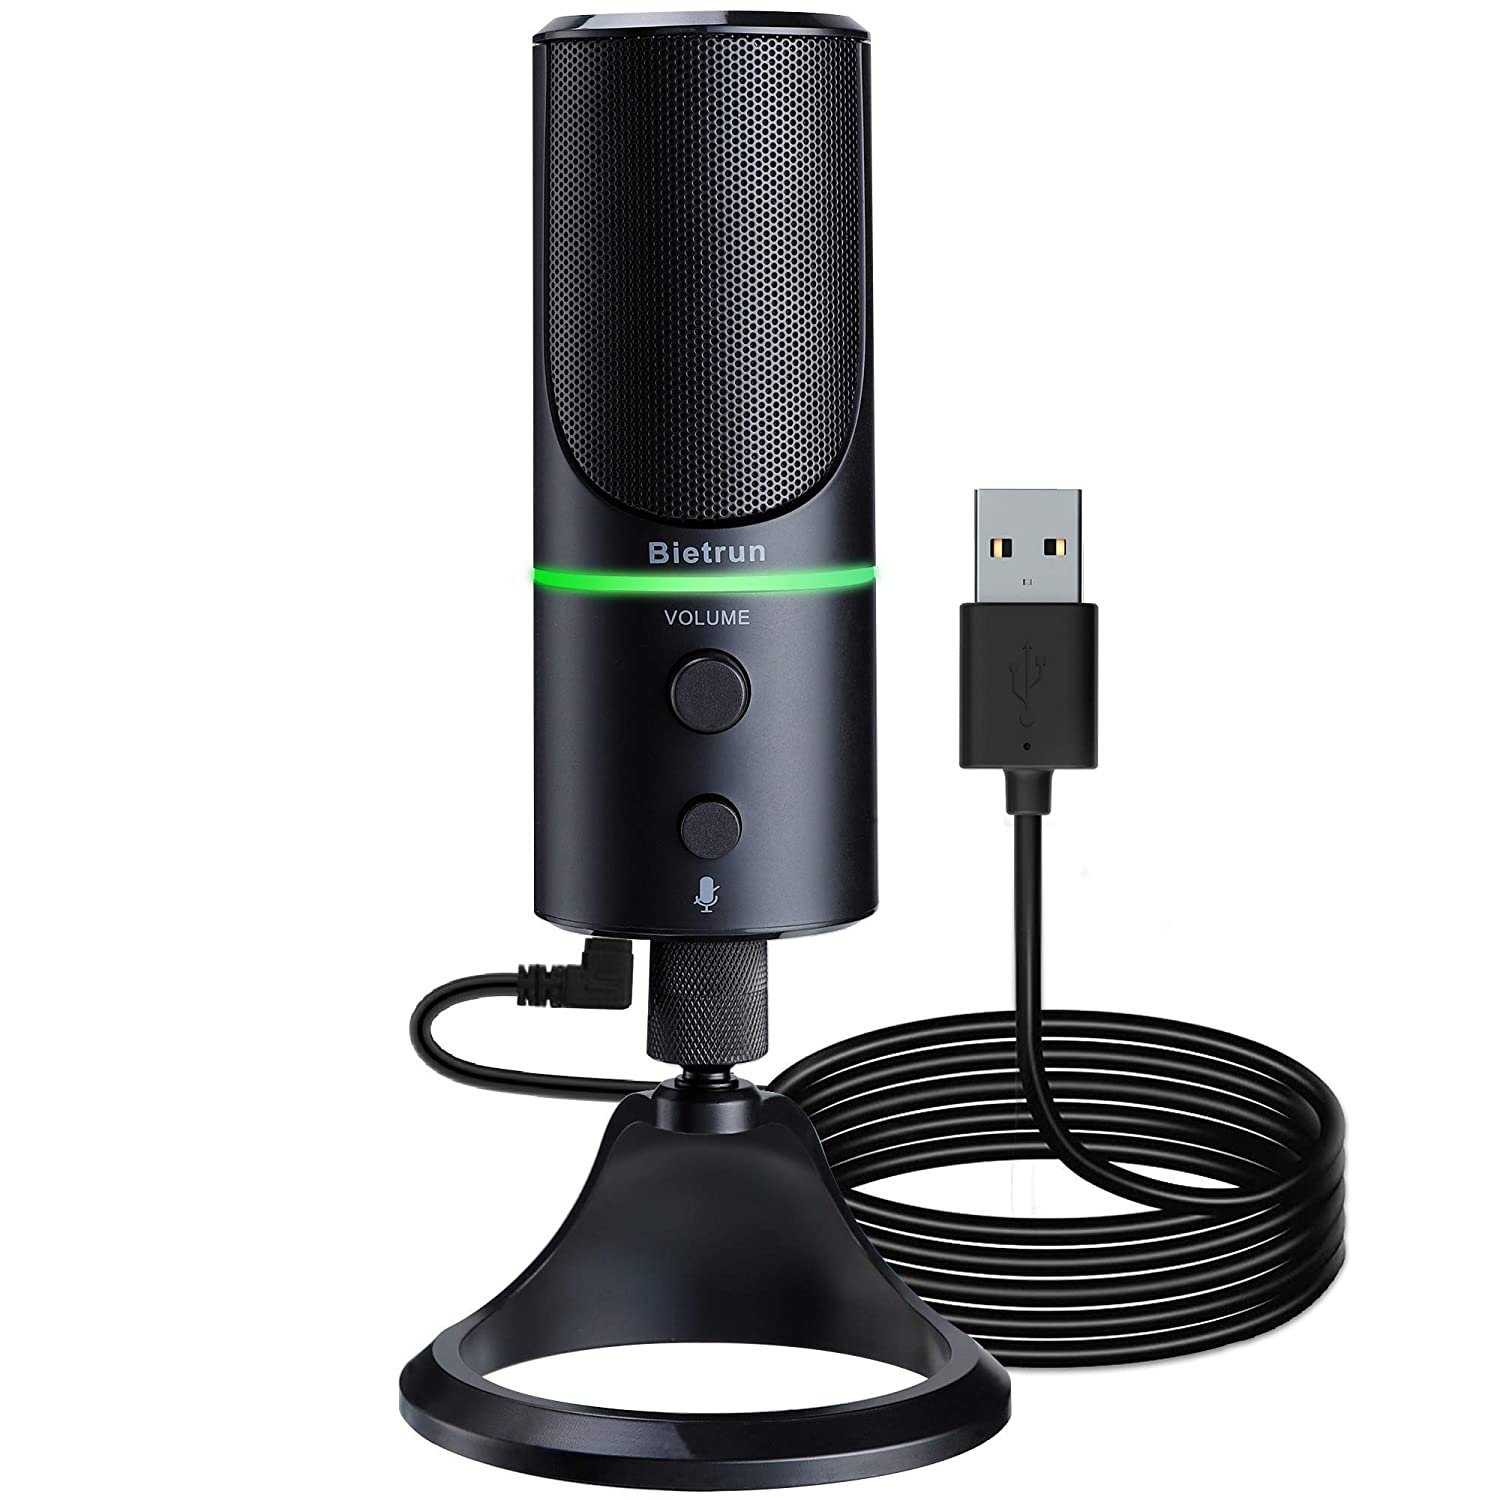 Usb Microphone, Condenser Gaming Mic For Mac/Windows/Desktop/Laptop, Plug & Play, Headphone Jack, 